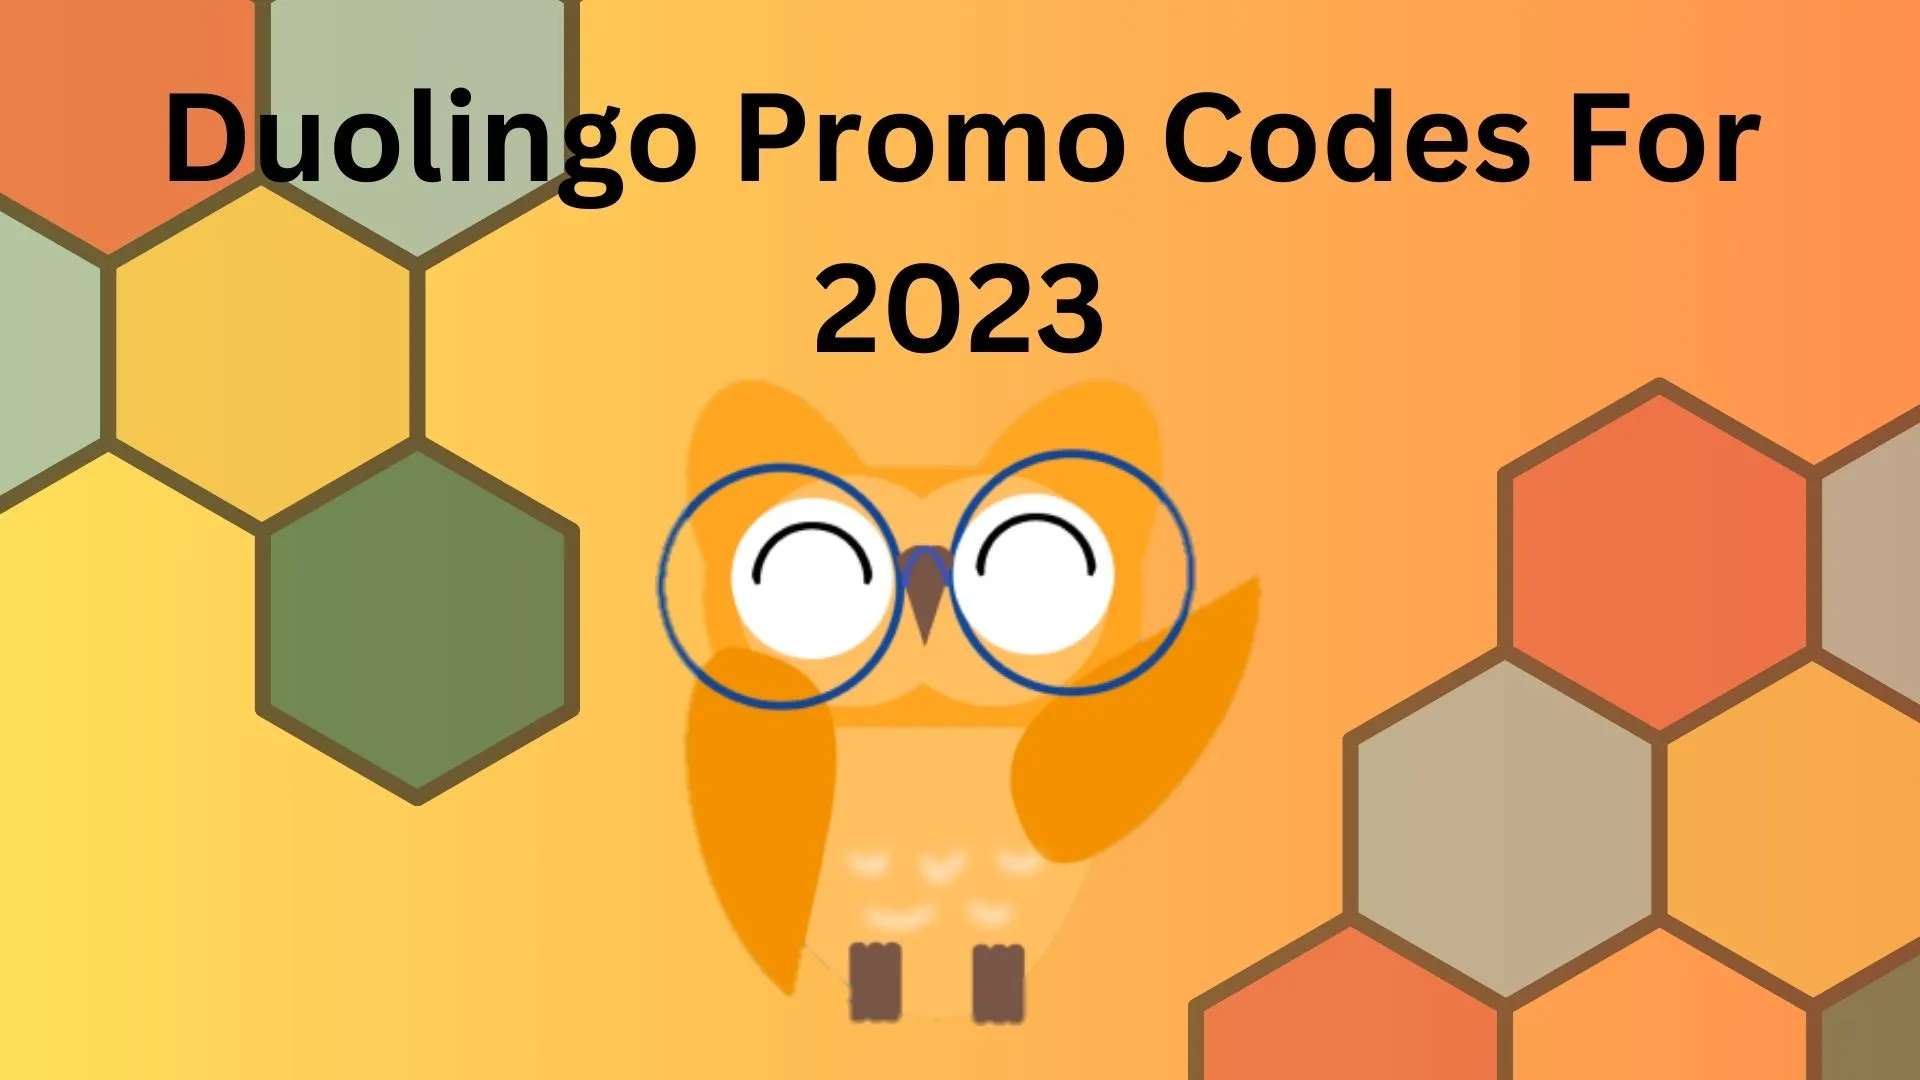 Duolingo Promo Codes For 2023